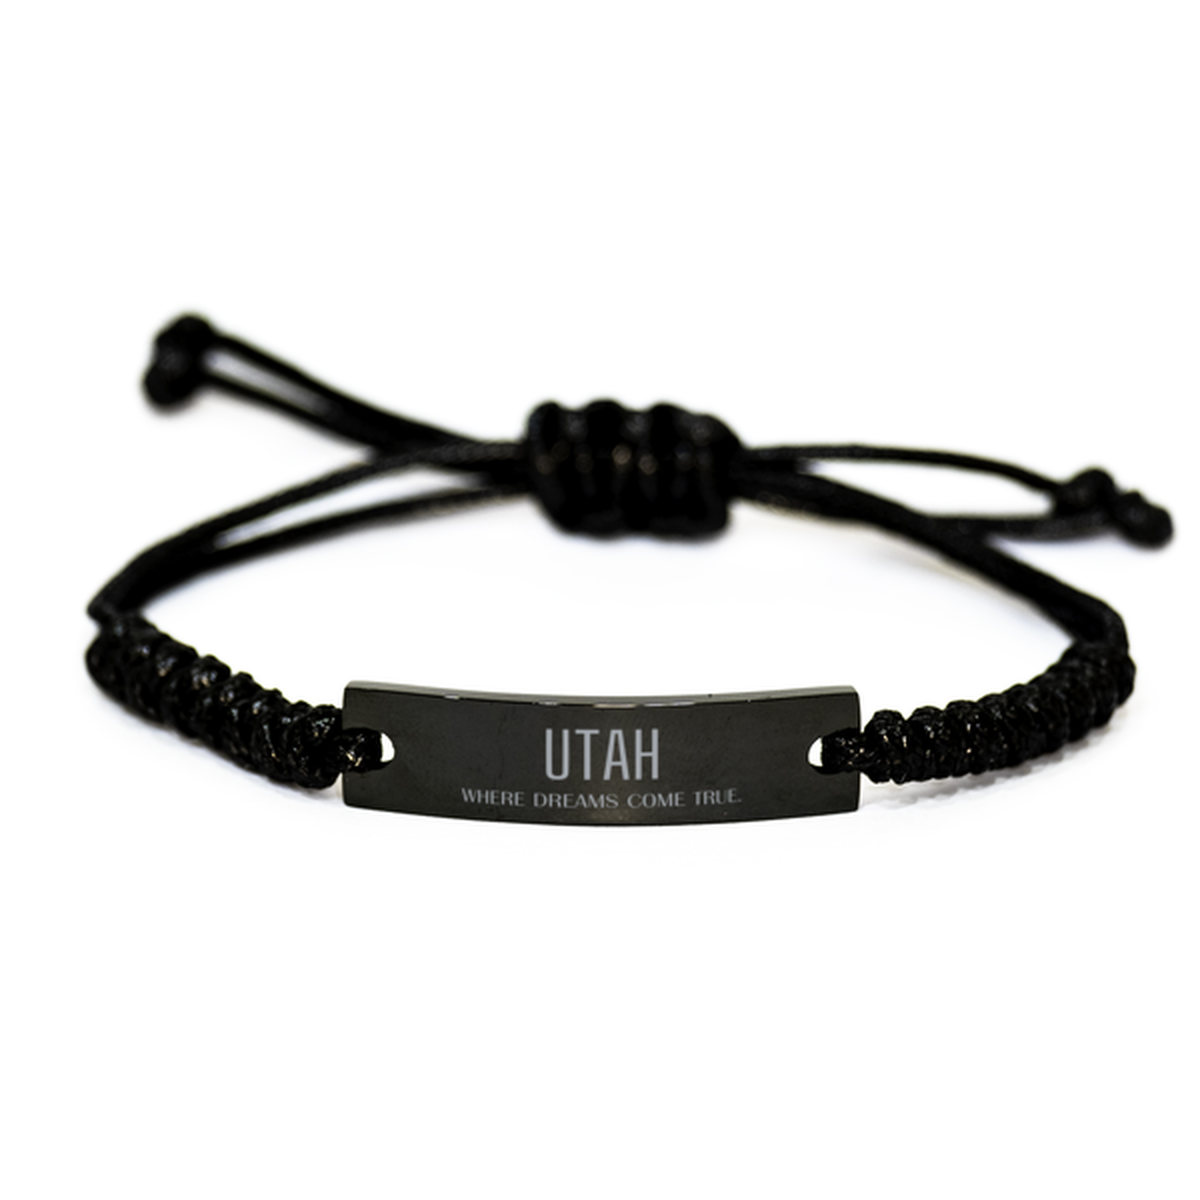 Love Utah State Black Rope Bracelet, Utah Where dreams come true, Birthday Inspirational Gifts For Utah Men, Women, Friends